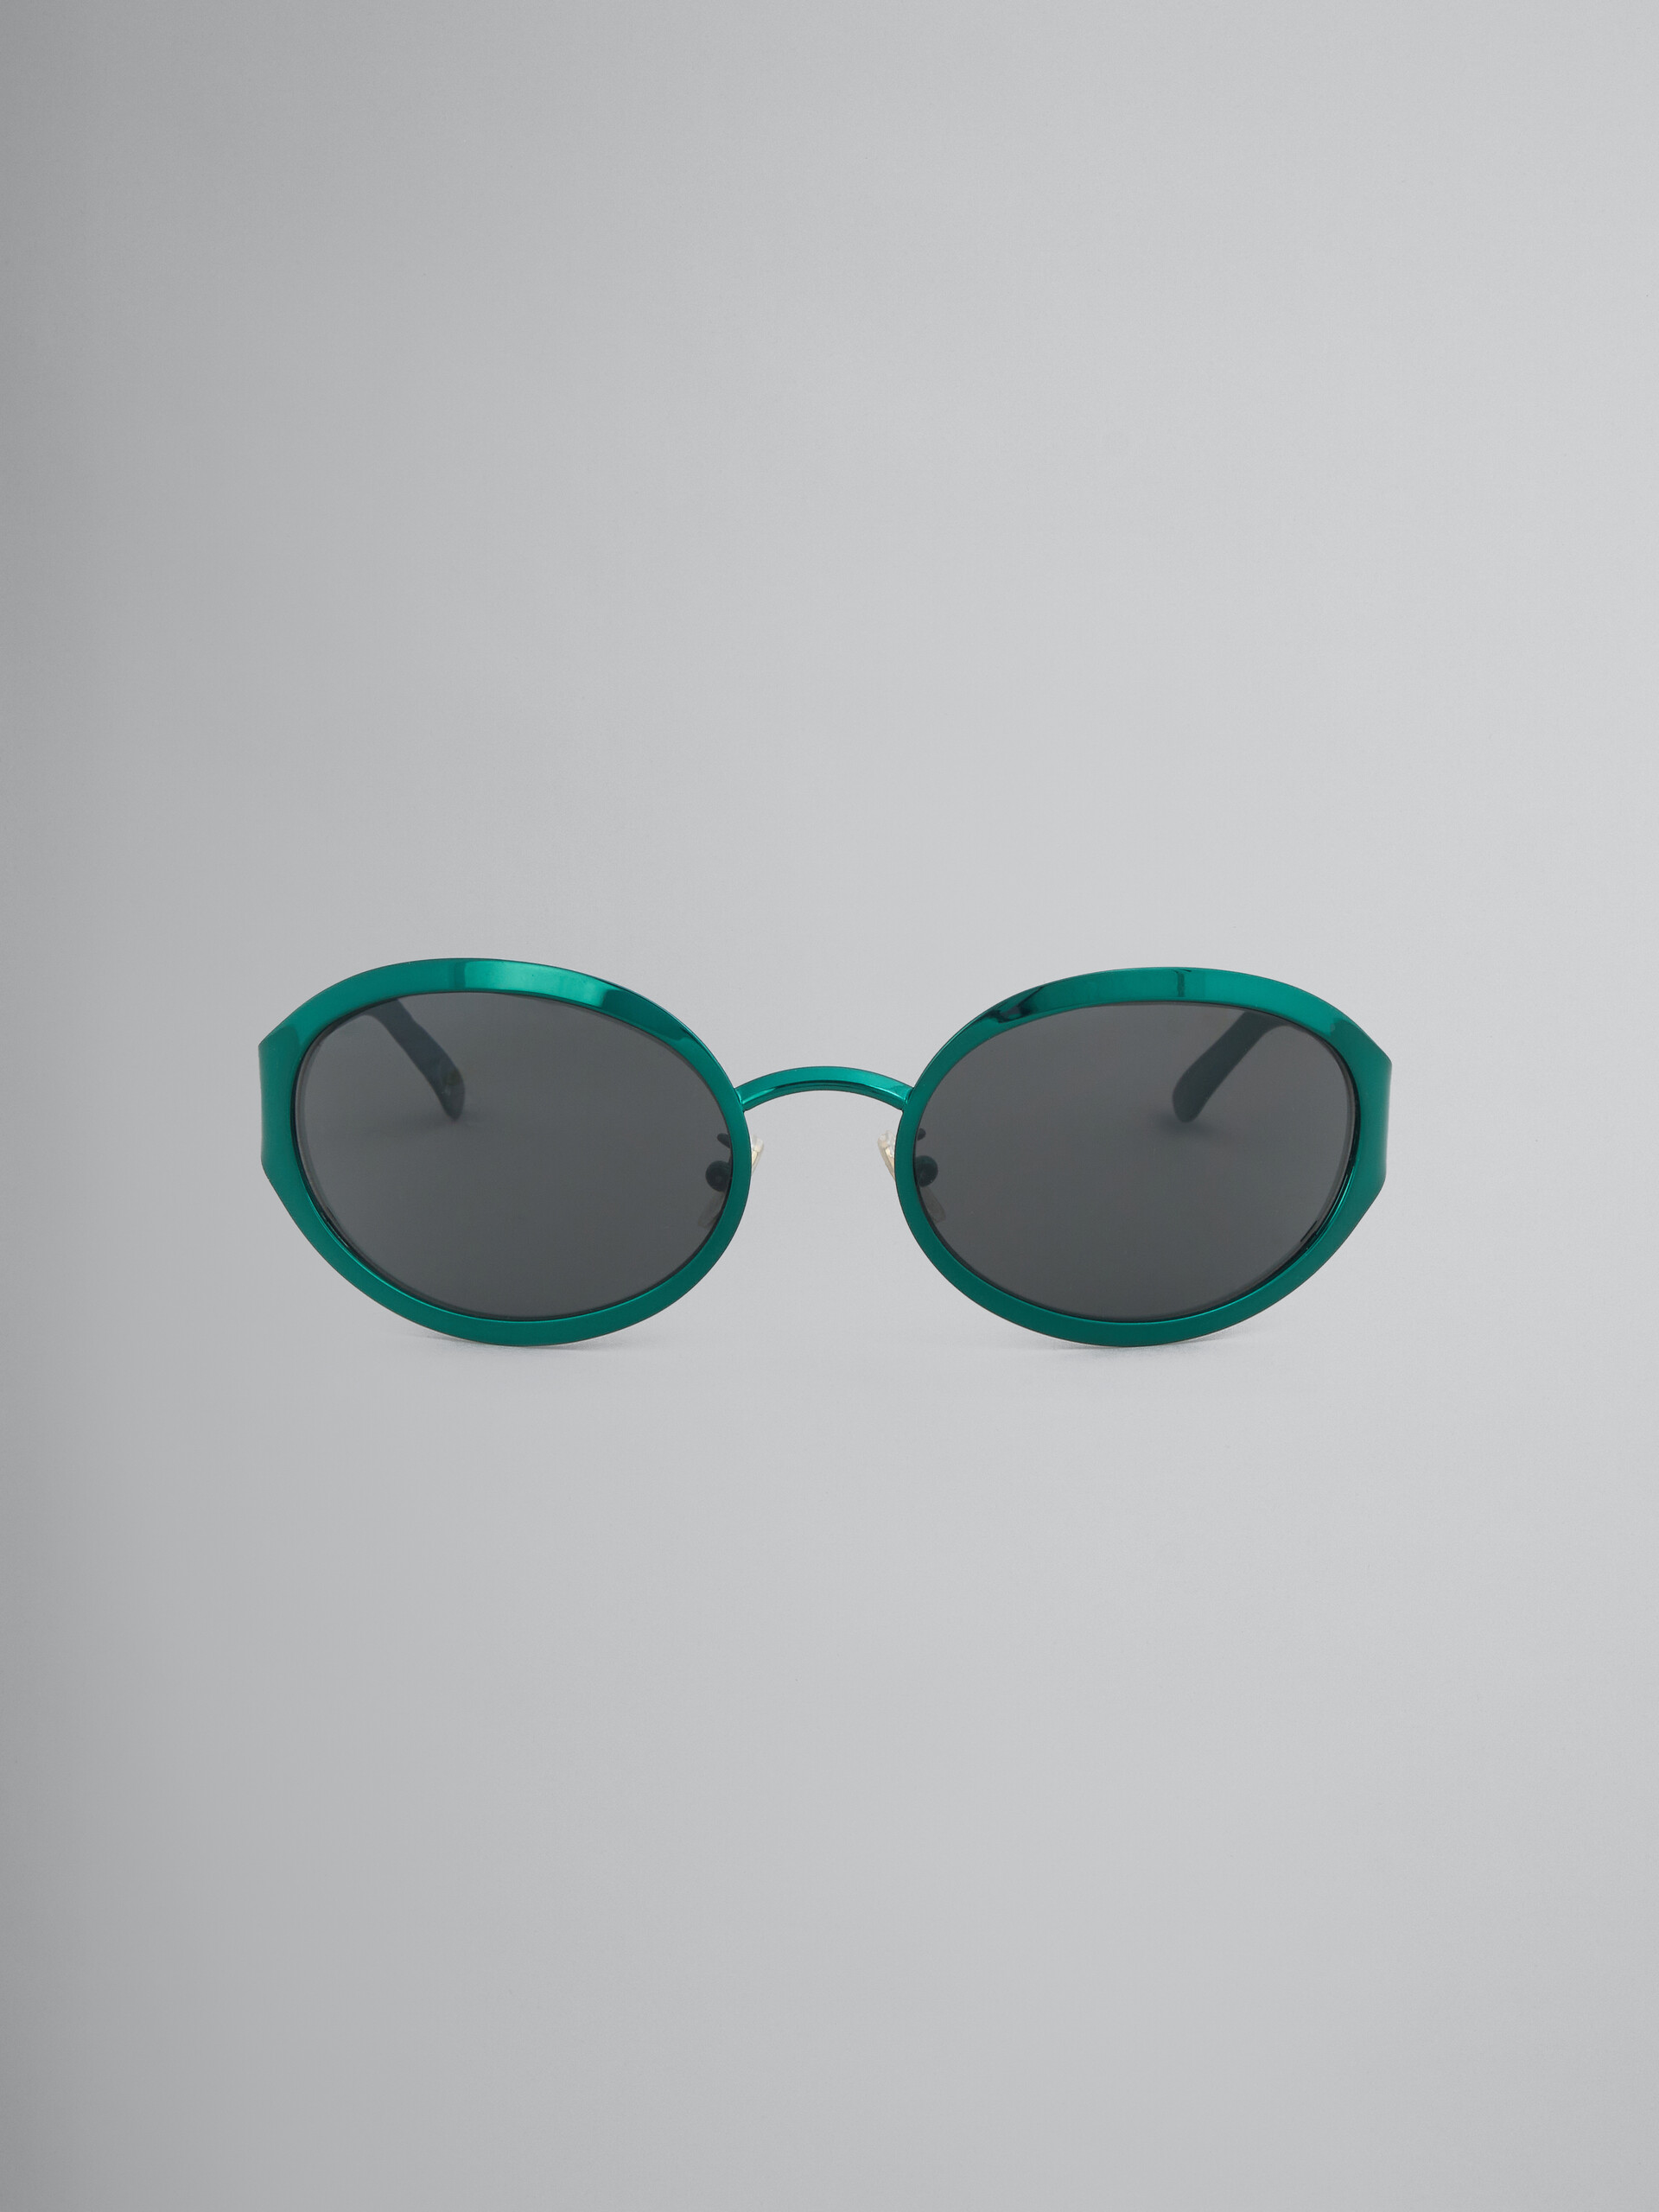 To-Sua green sunglasses - Optical - Image 1